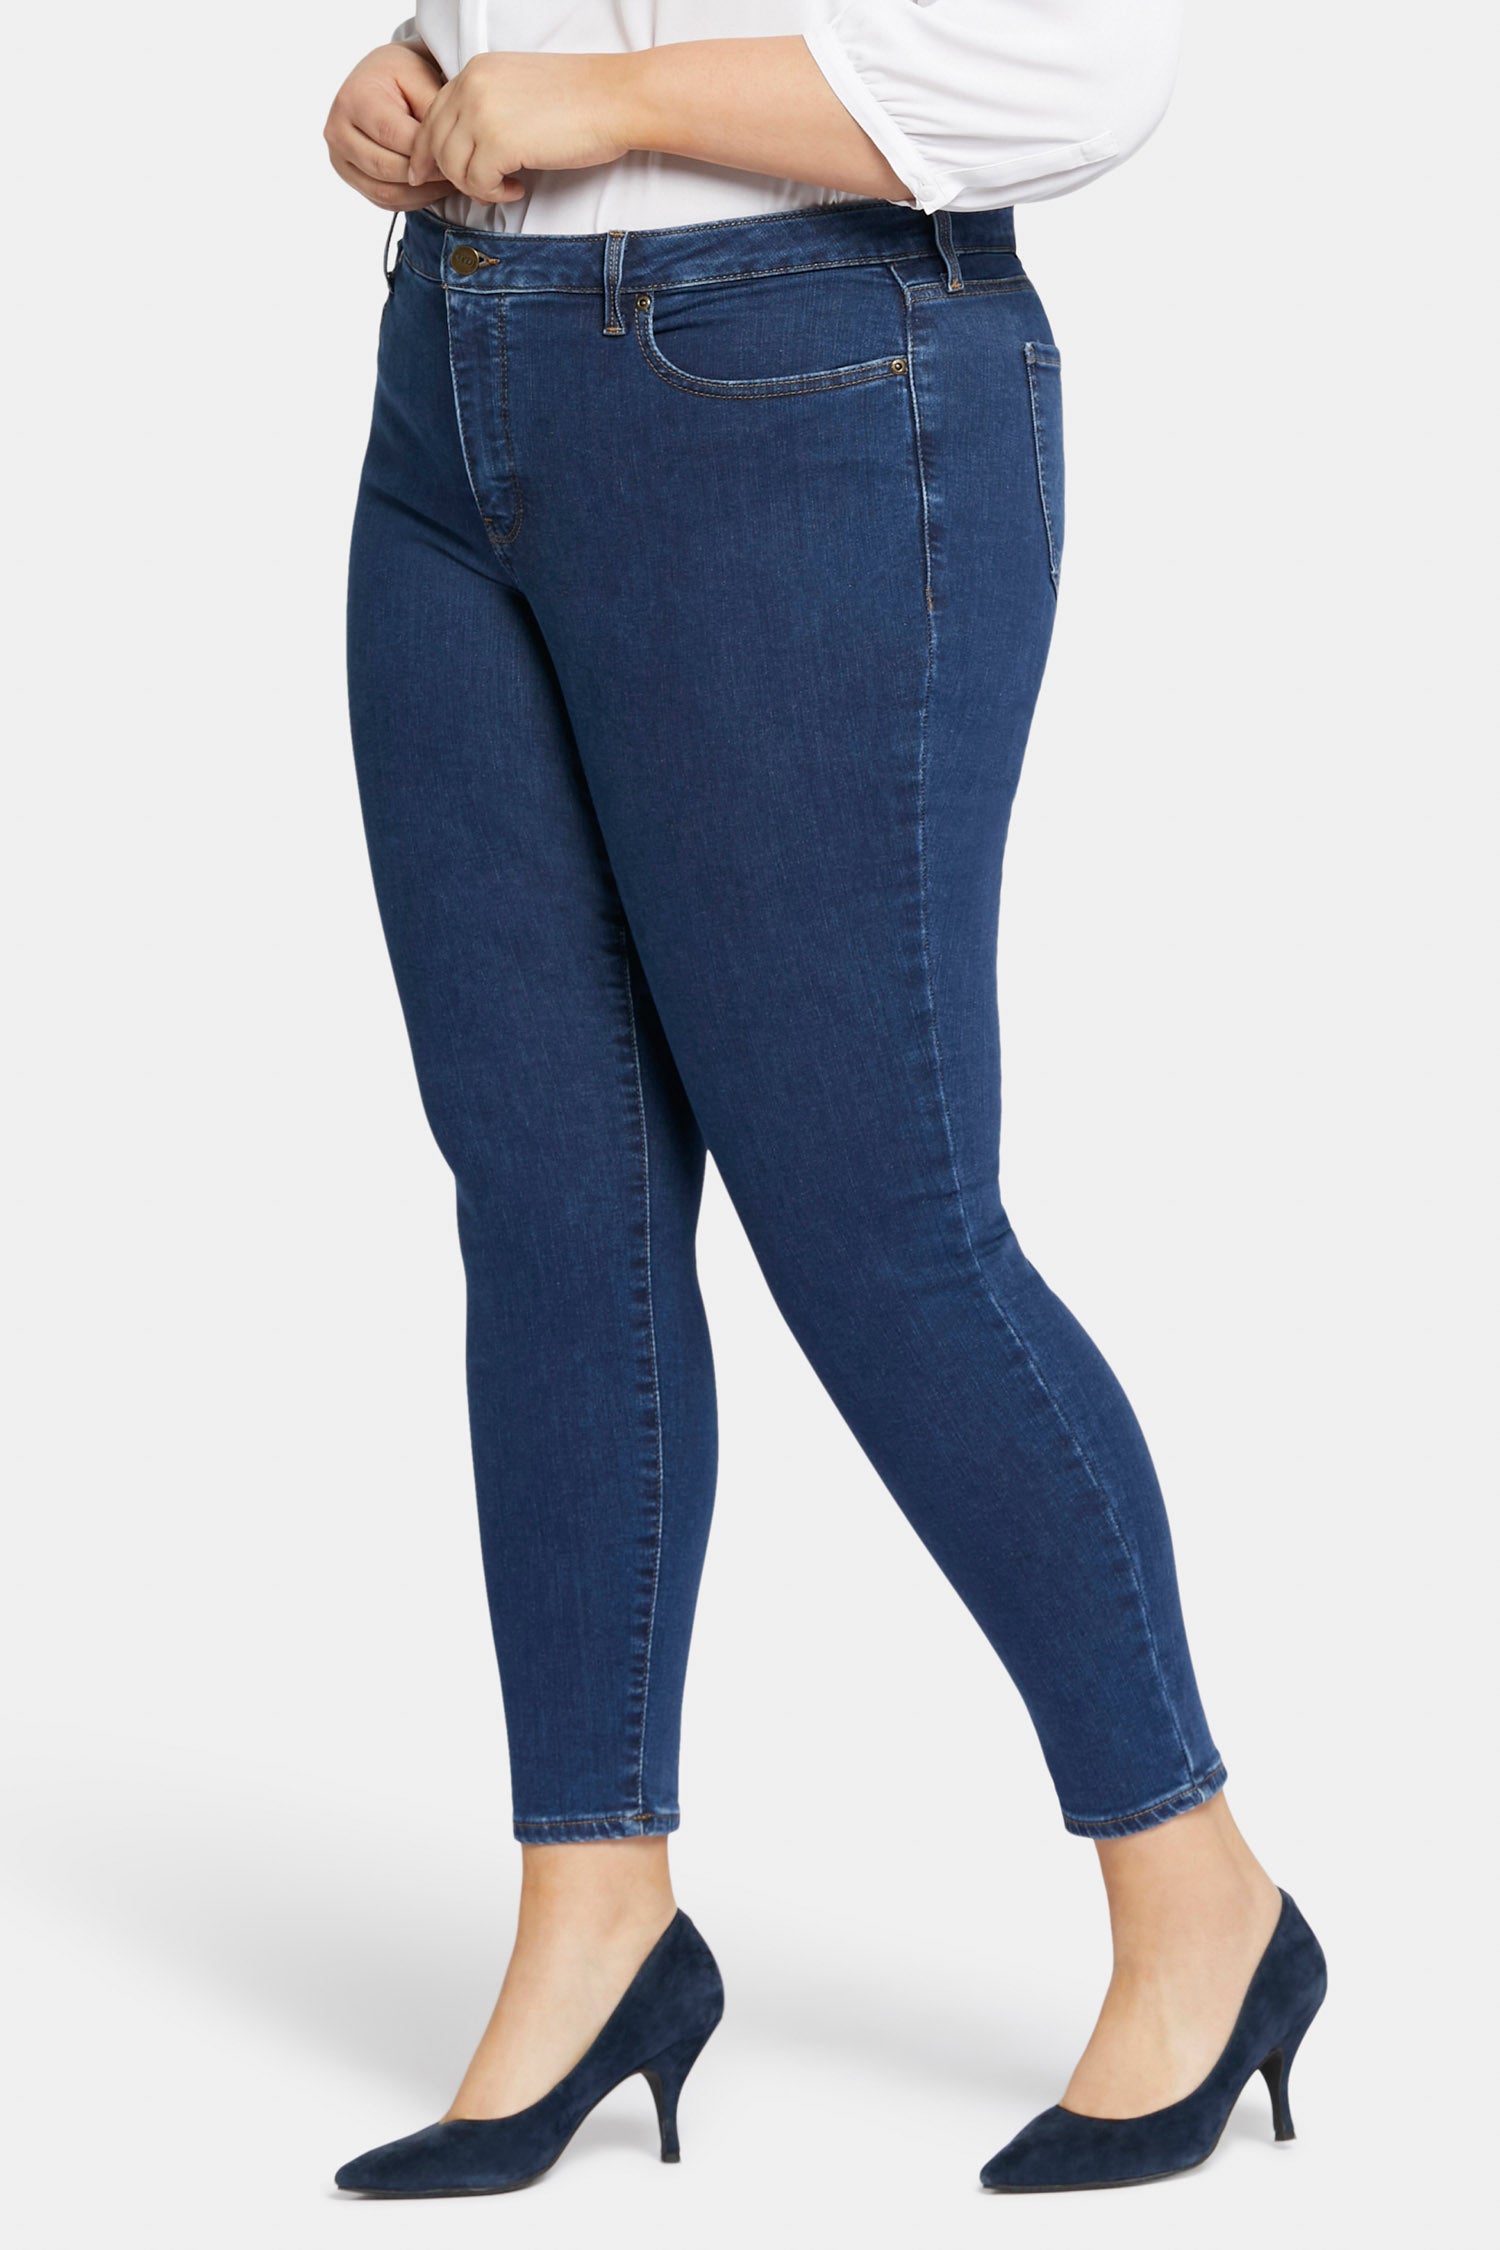 Pre-Owned - Holes, NYDJ Plus Women's Dark Wash Tummy Tuck Jeans, Size 18W 